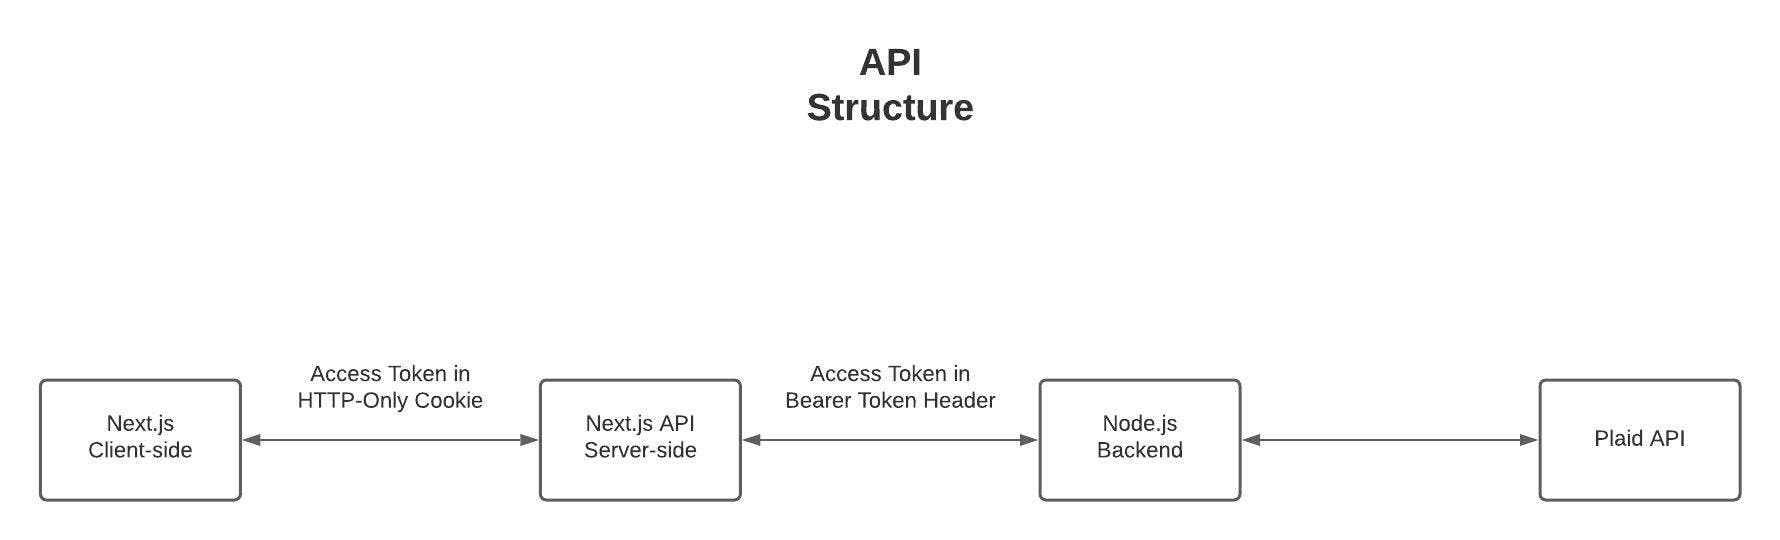 API Structure.jpeg